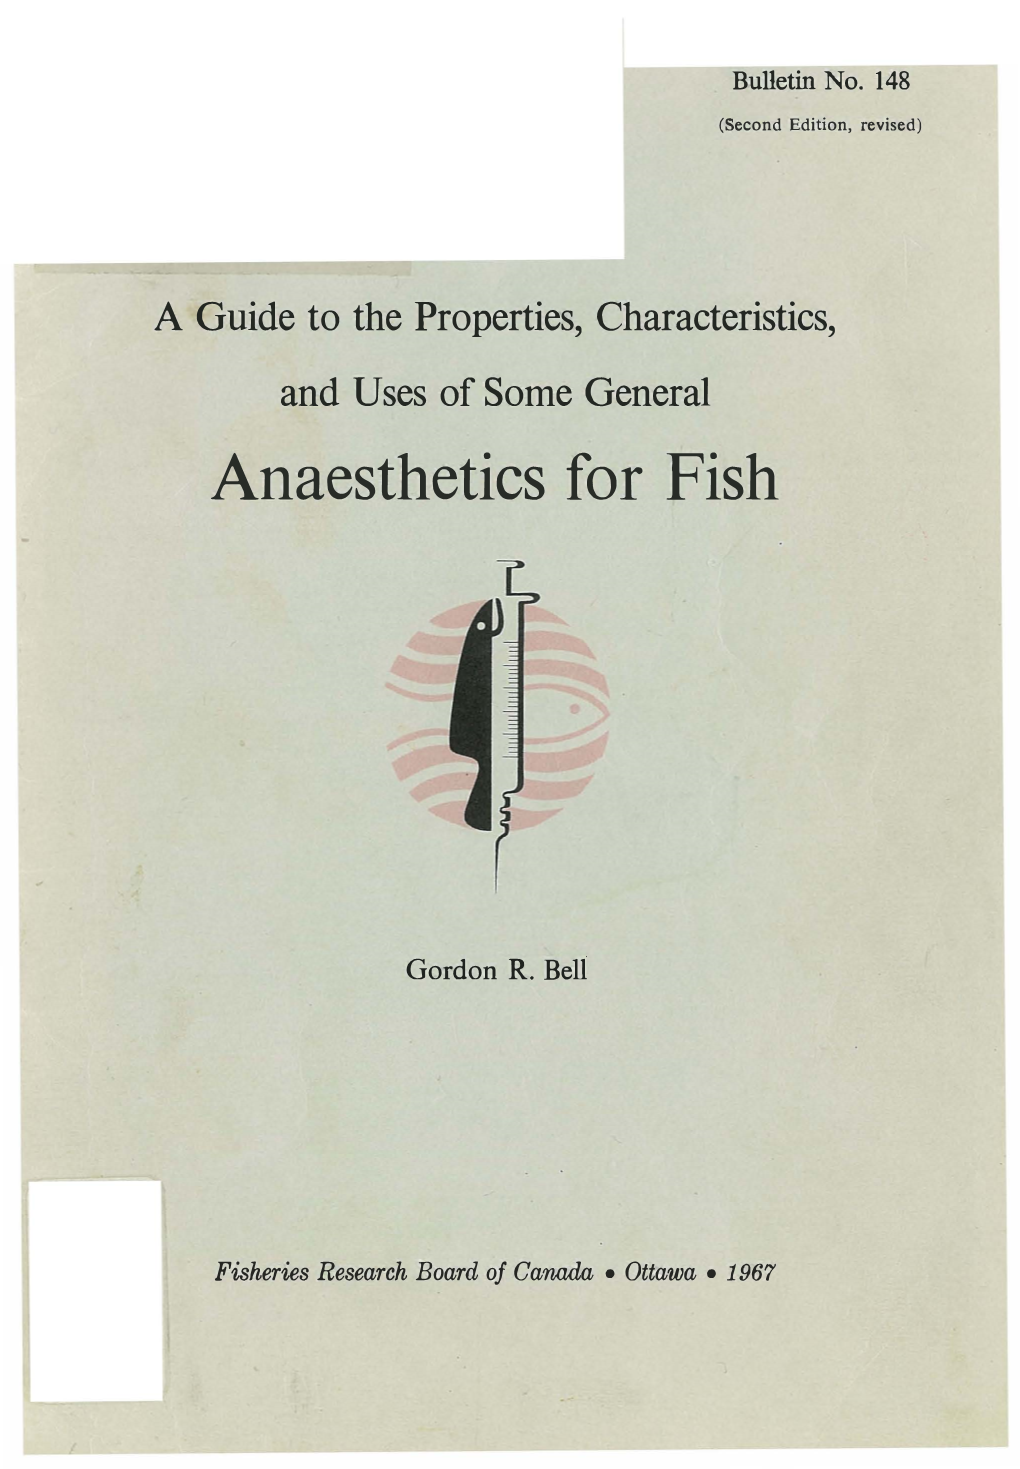 Anaesthetics for Fish